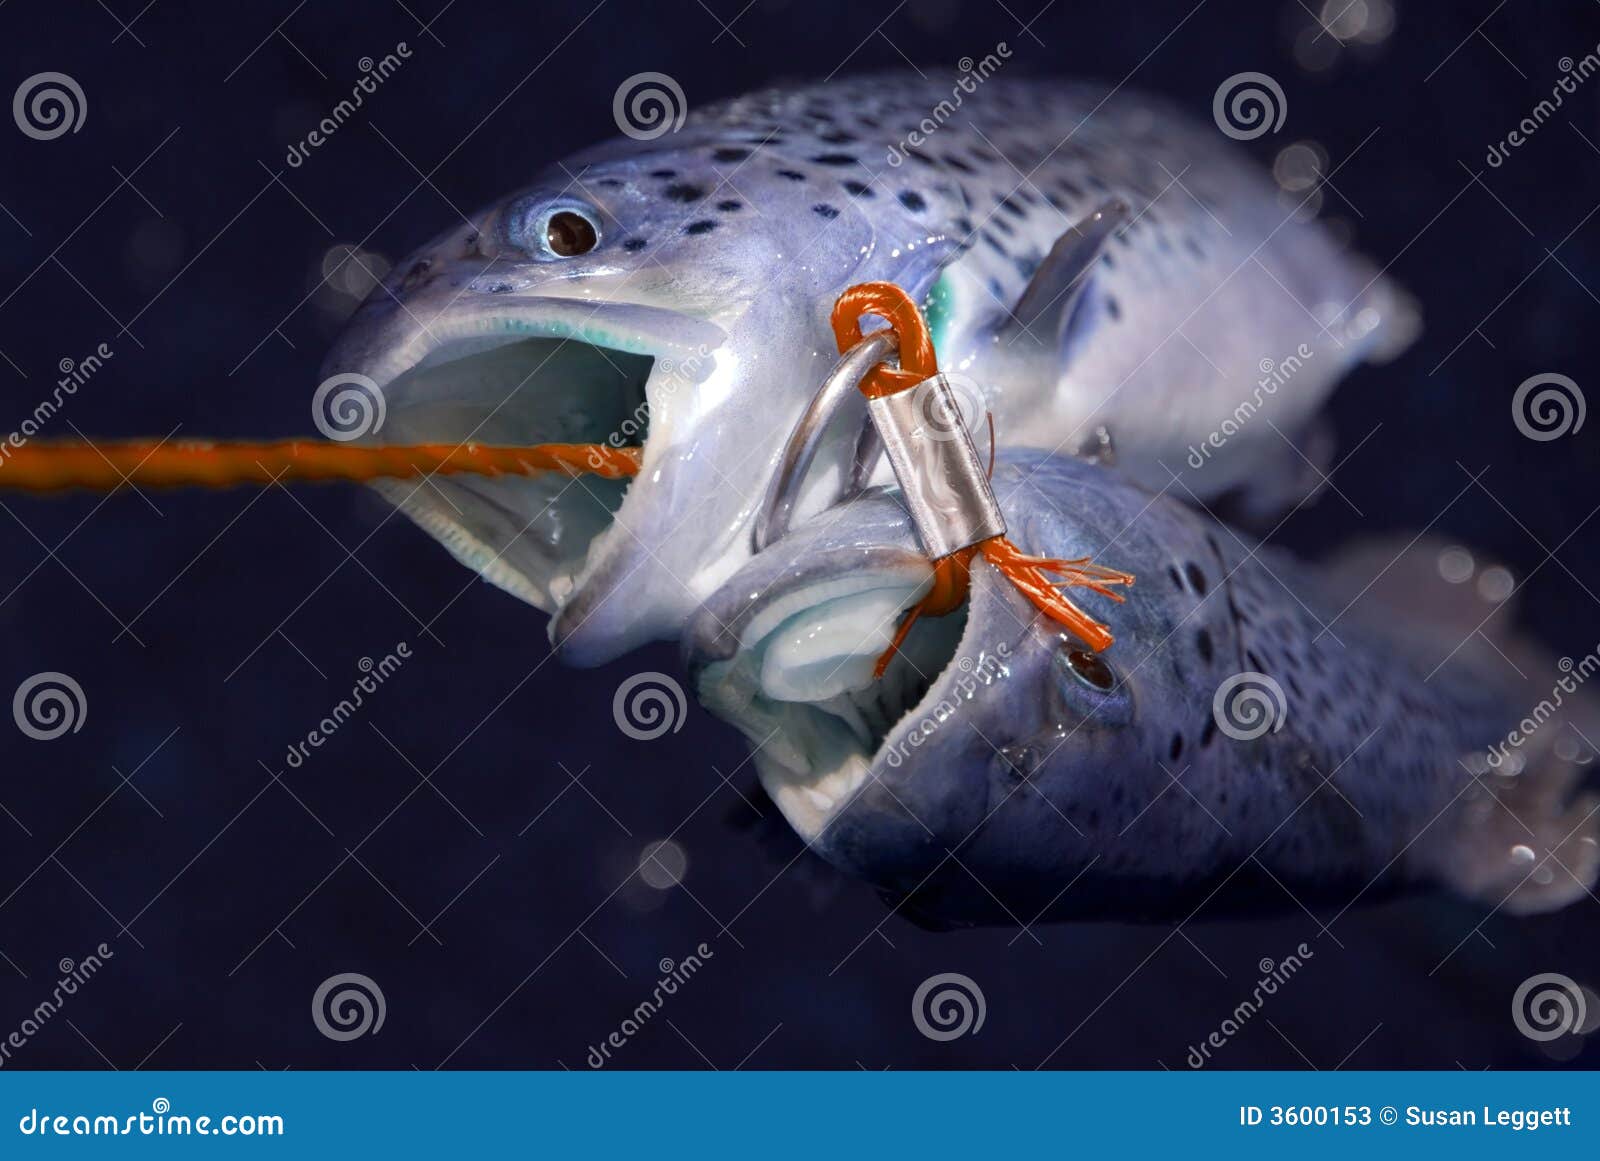 Fish on stringer stock image. Image of stream, closeup